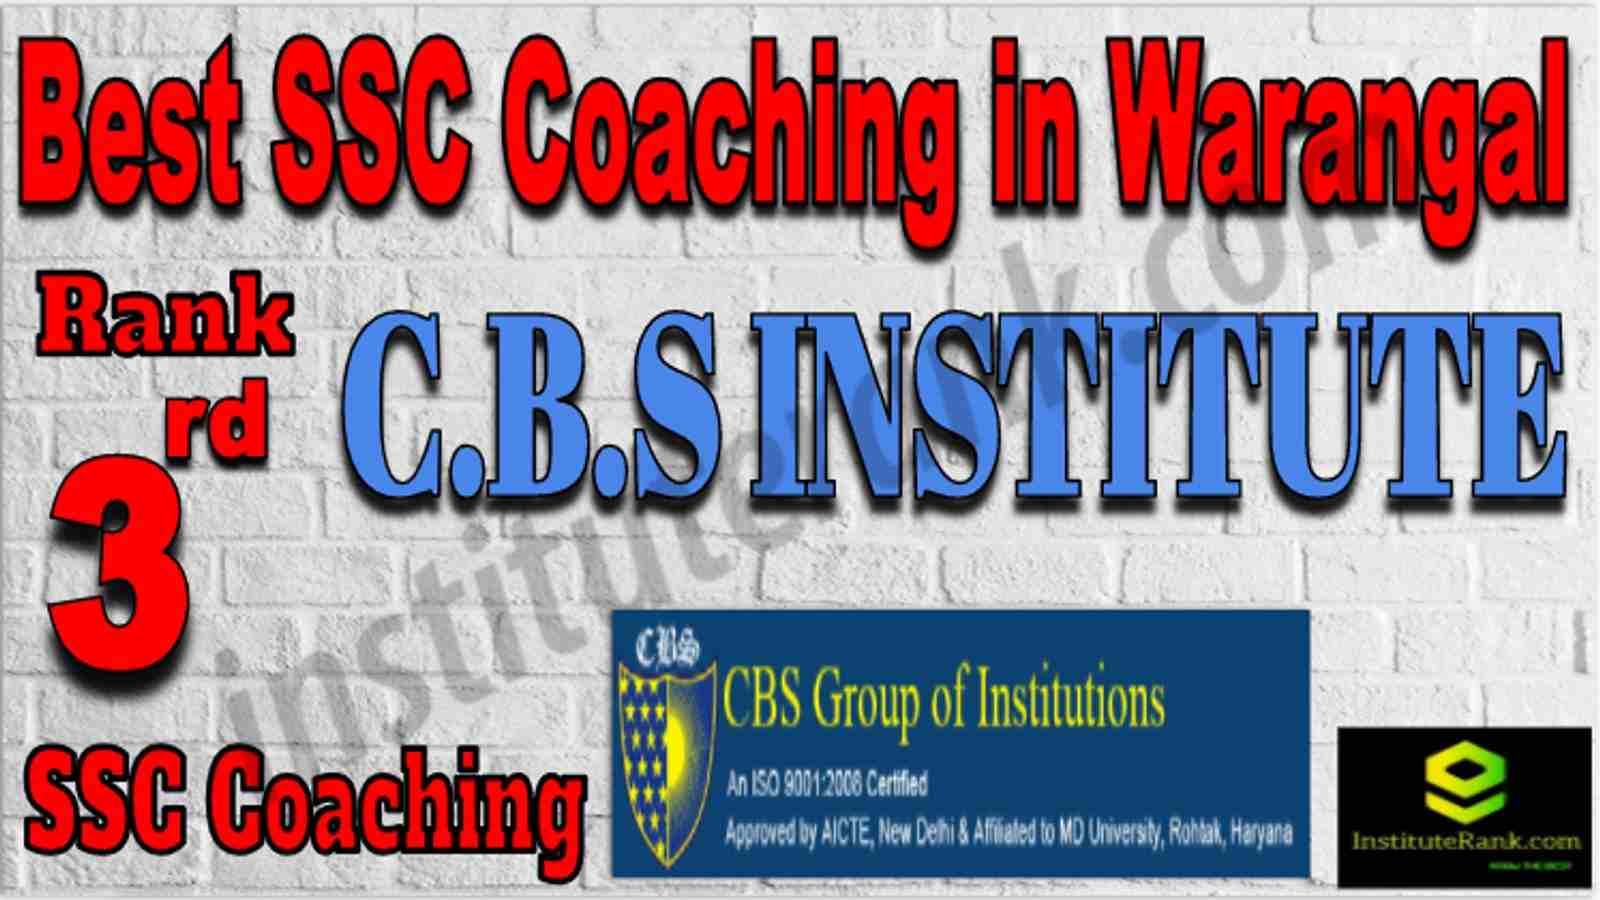 Rank 3 Best SSC Coaching in Warangal